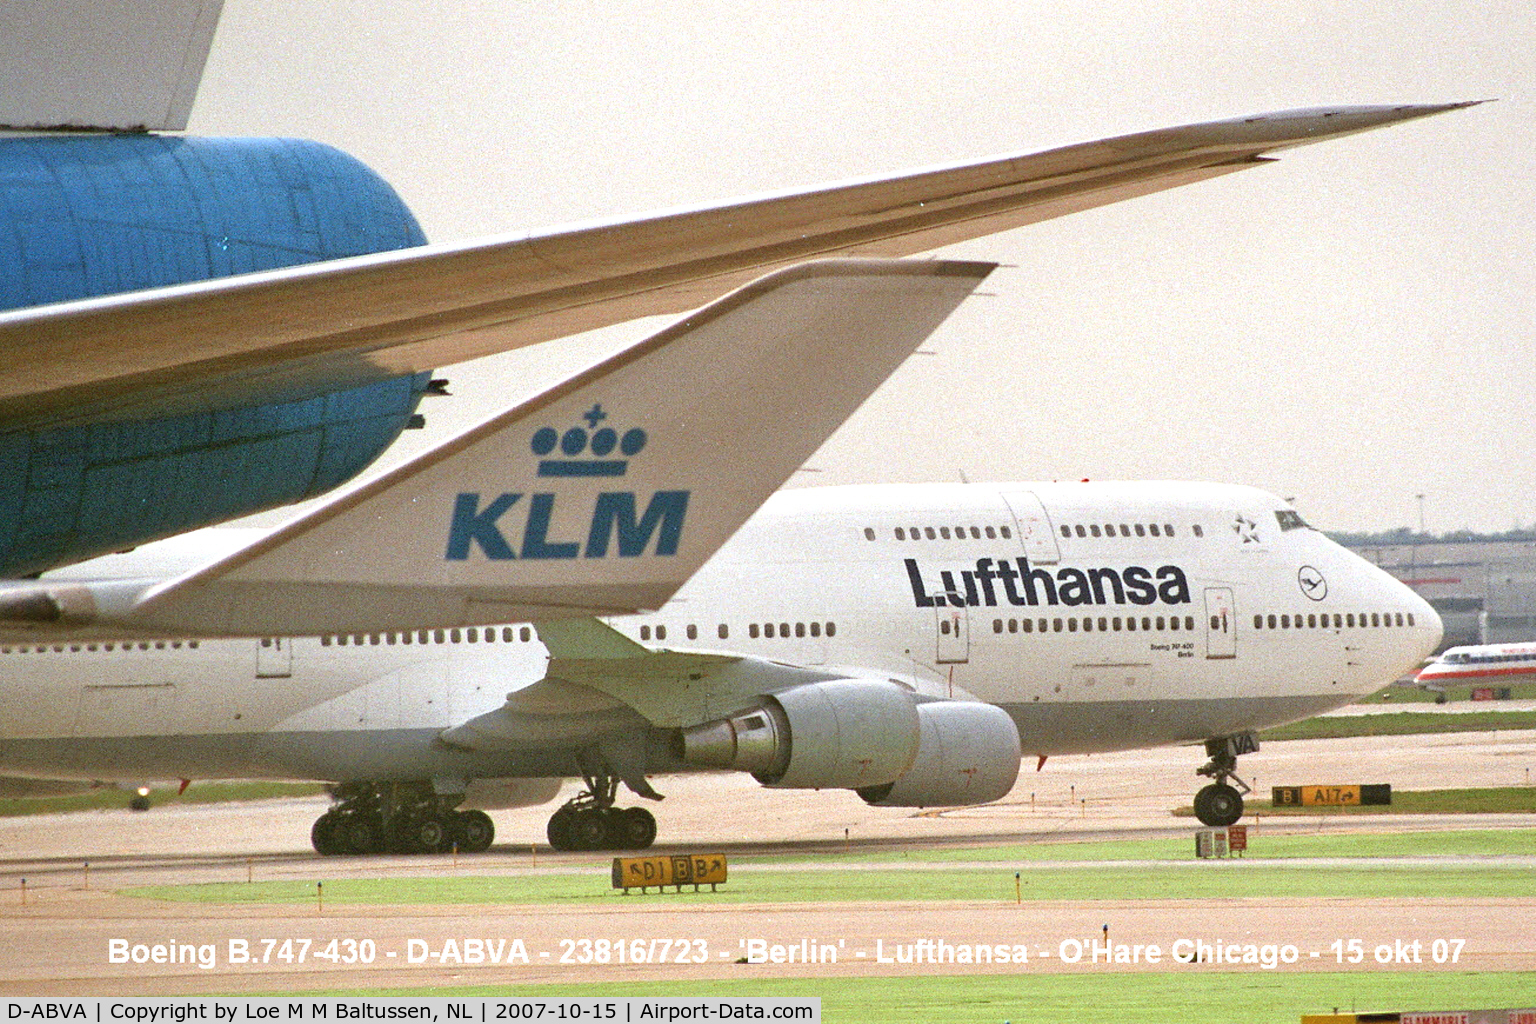 D-ABVA, 1989 Boeing 747-430 C/N 23816, Lufthansa behind KLM, D-ABVA overtaking PH-BFY outside Terminal-2